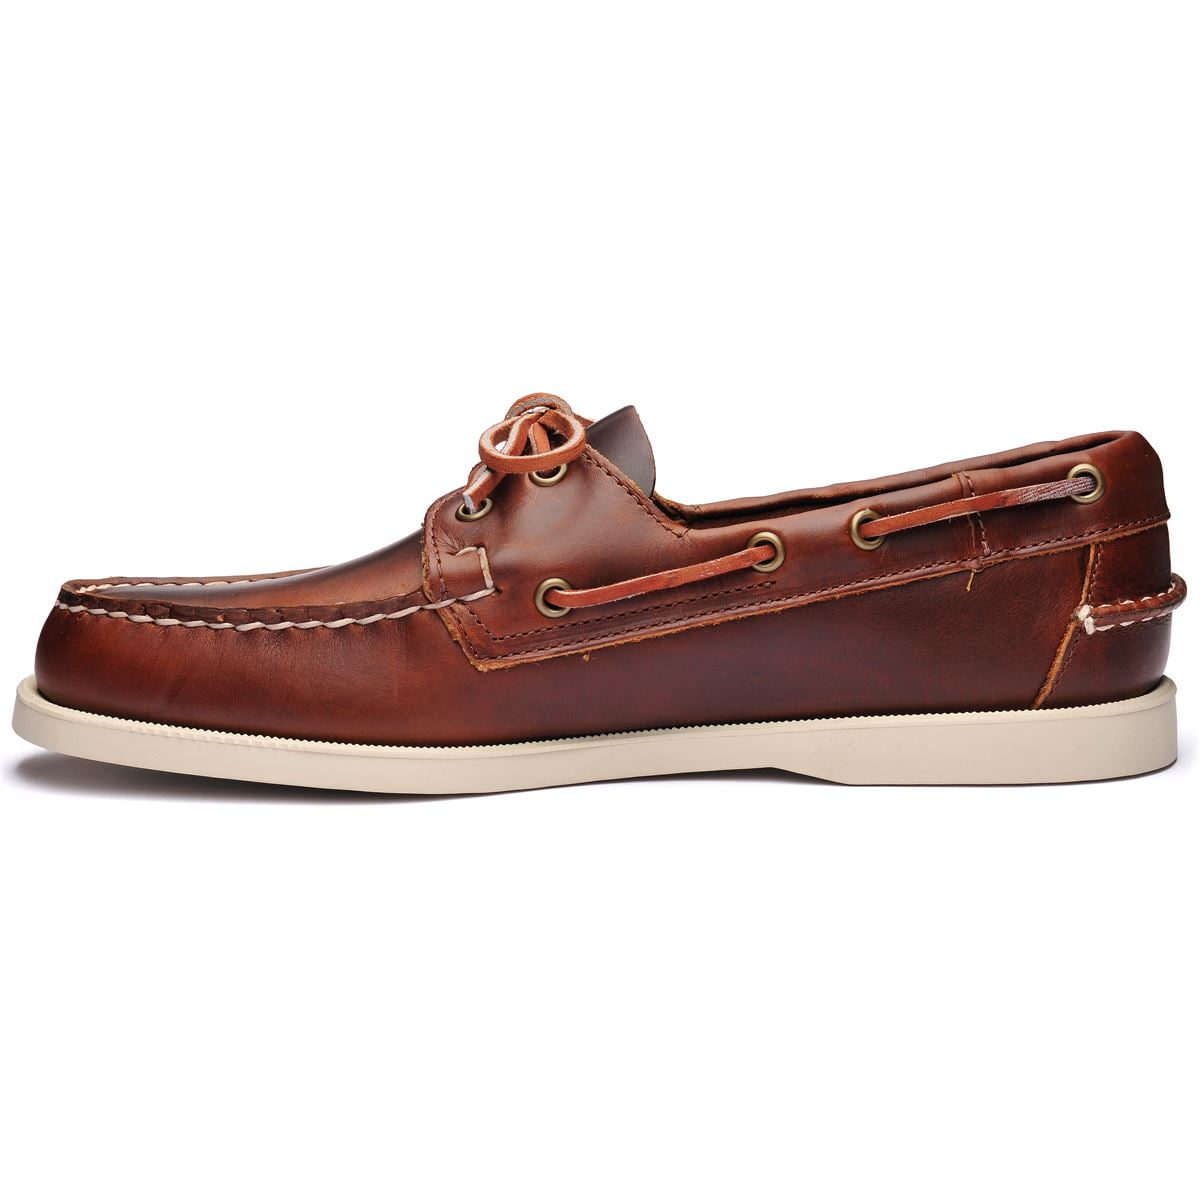 SEBAGO PORTLAND - DOCKSIDES Shoes Brown -